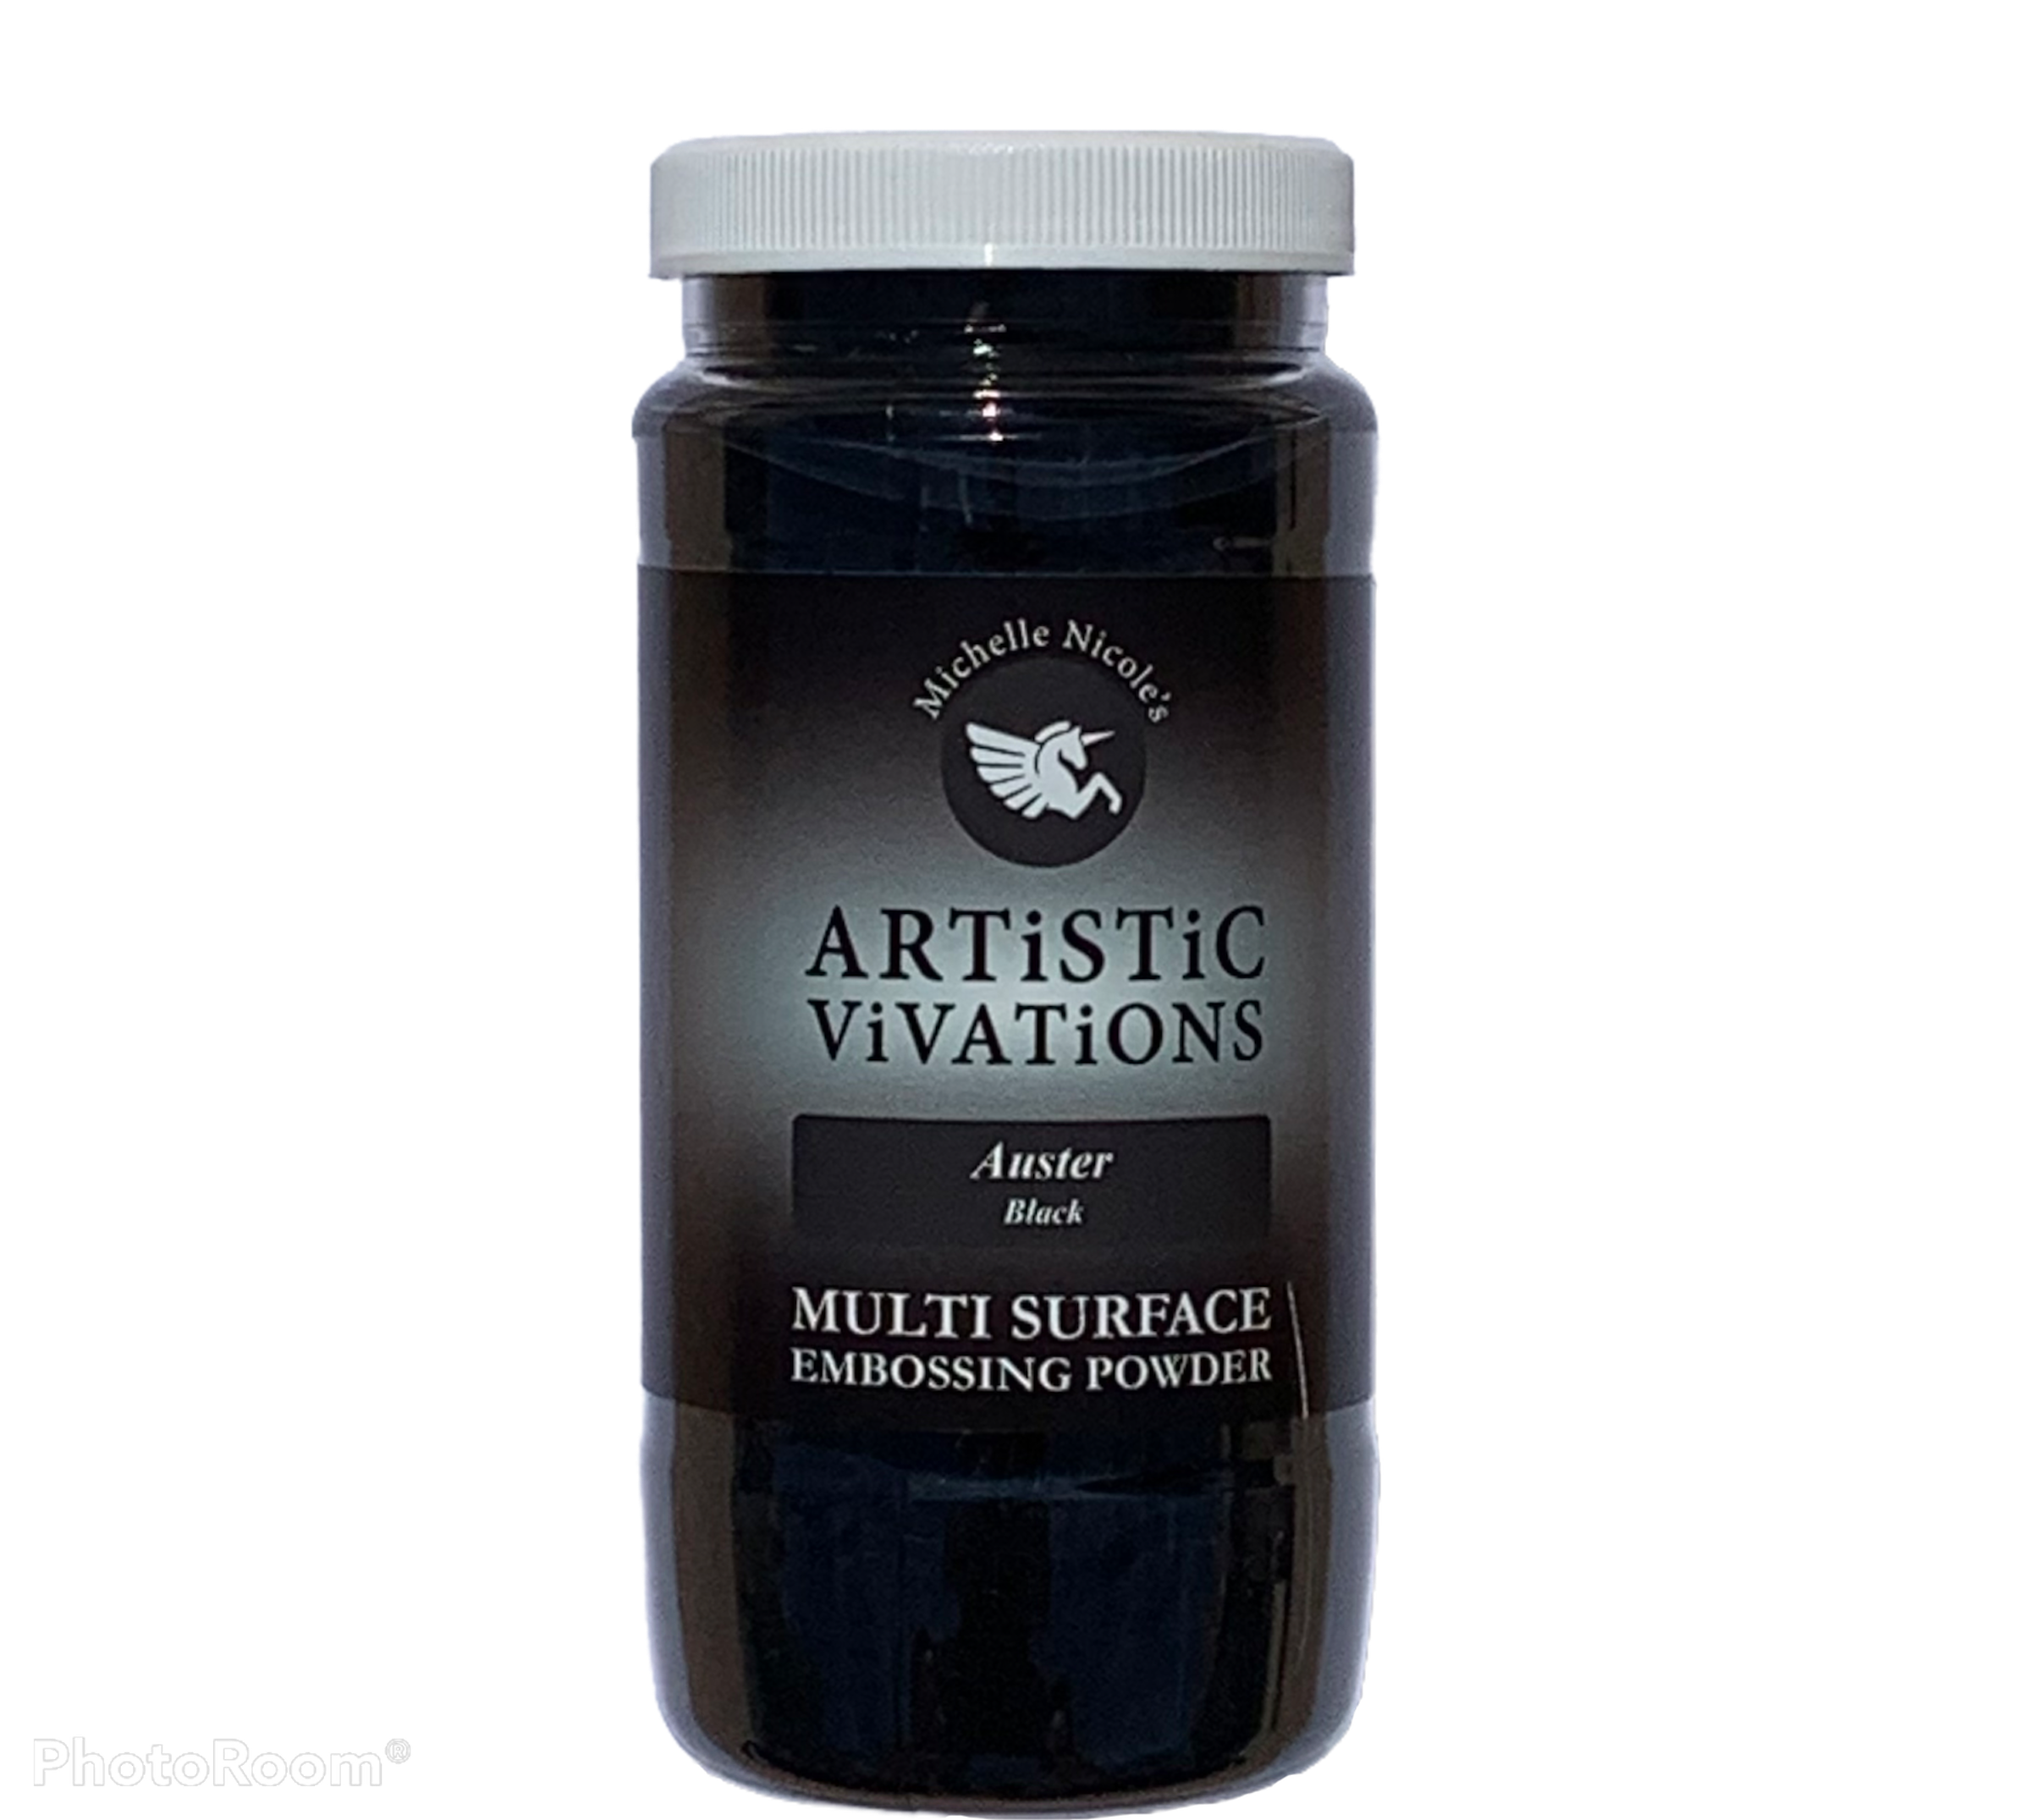 Auster - Black Metallic Embossing Powder - Michelle Nicole's ARTiSTiC ViVATiONS